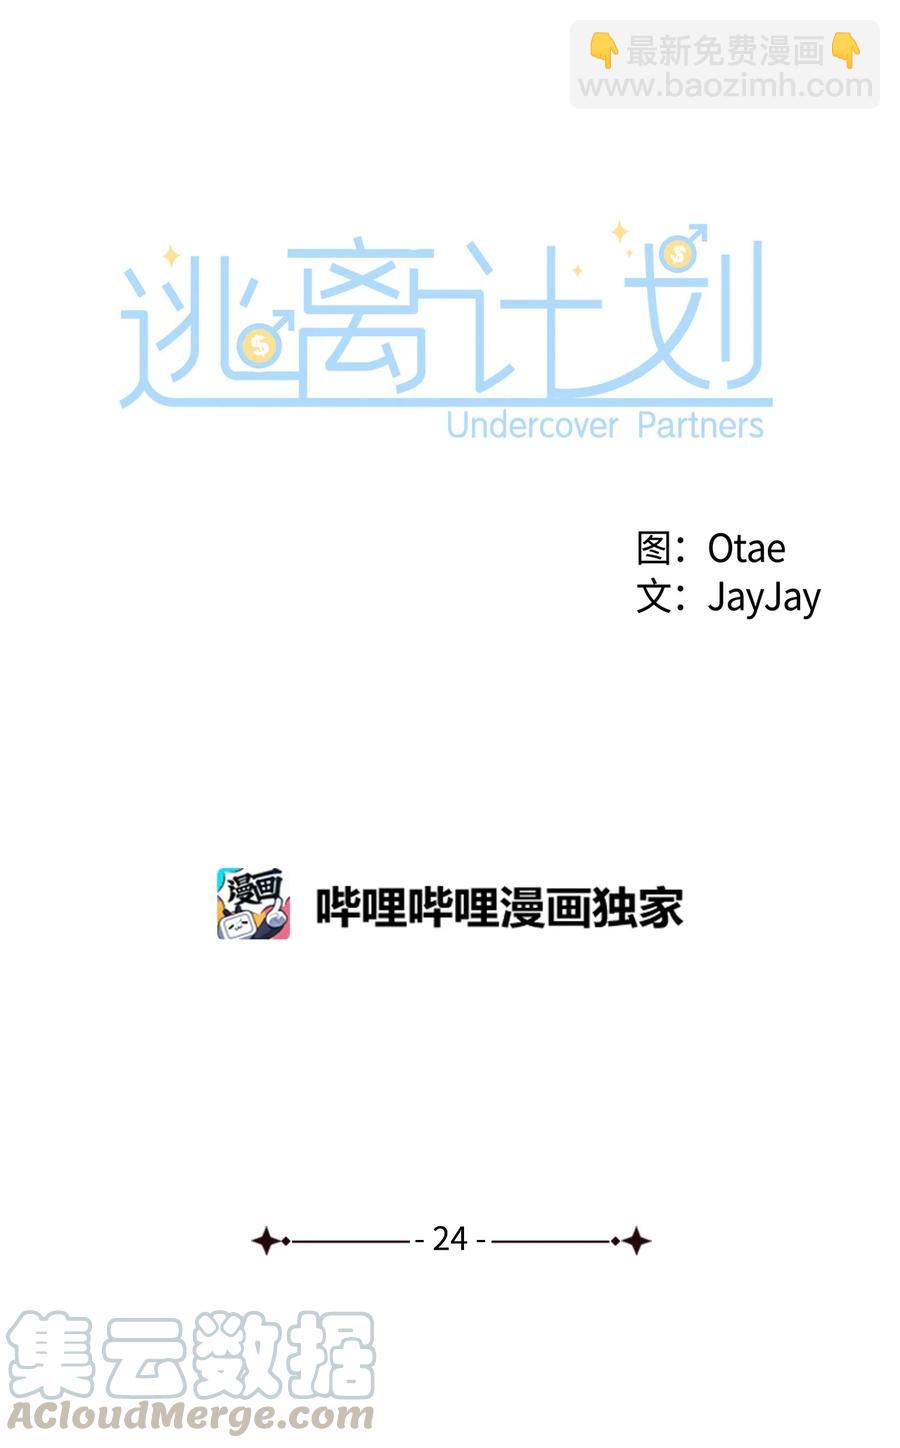 逃離計劃-Undercover Partners - 24 衝破難關(1/2) - 8